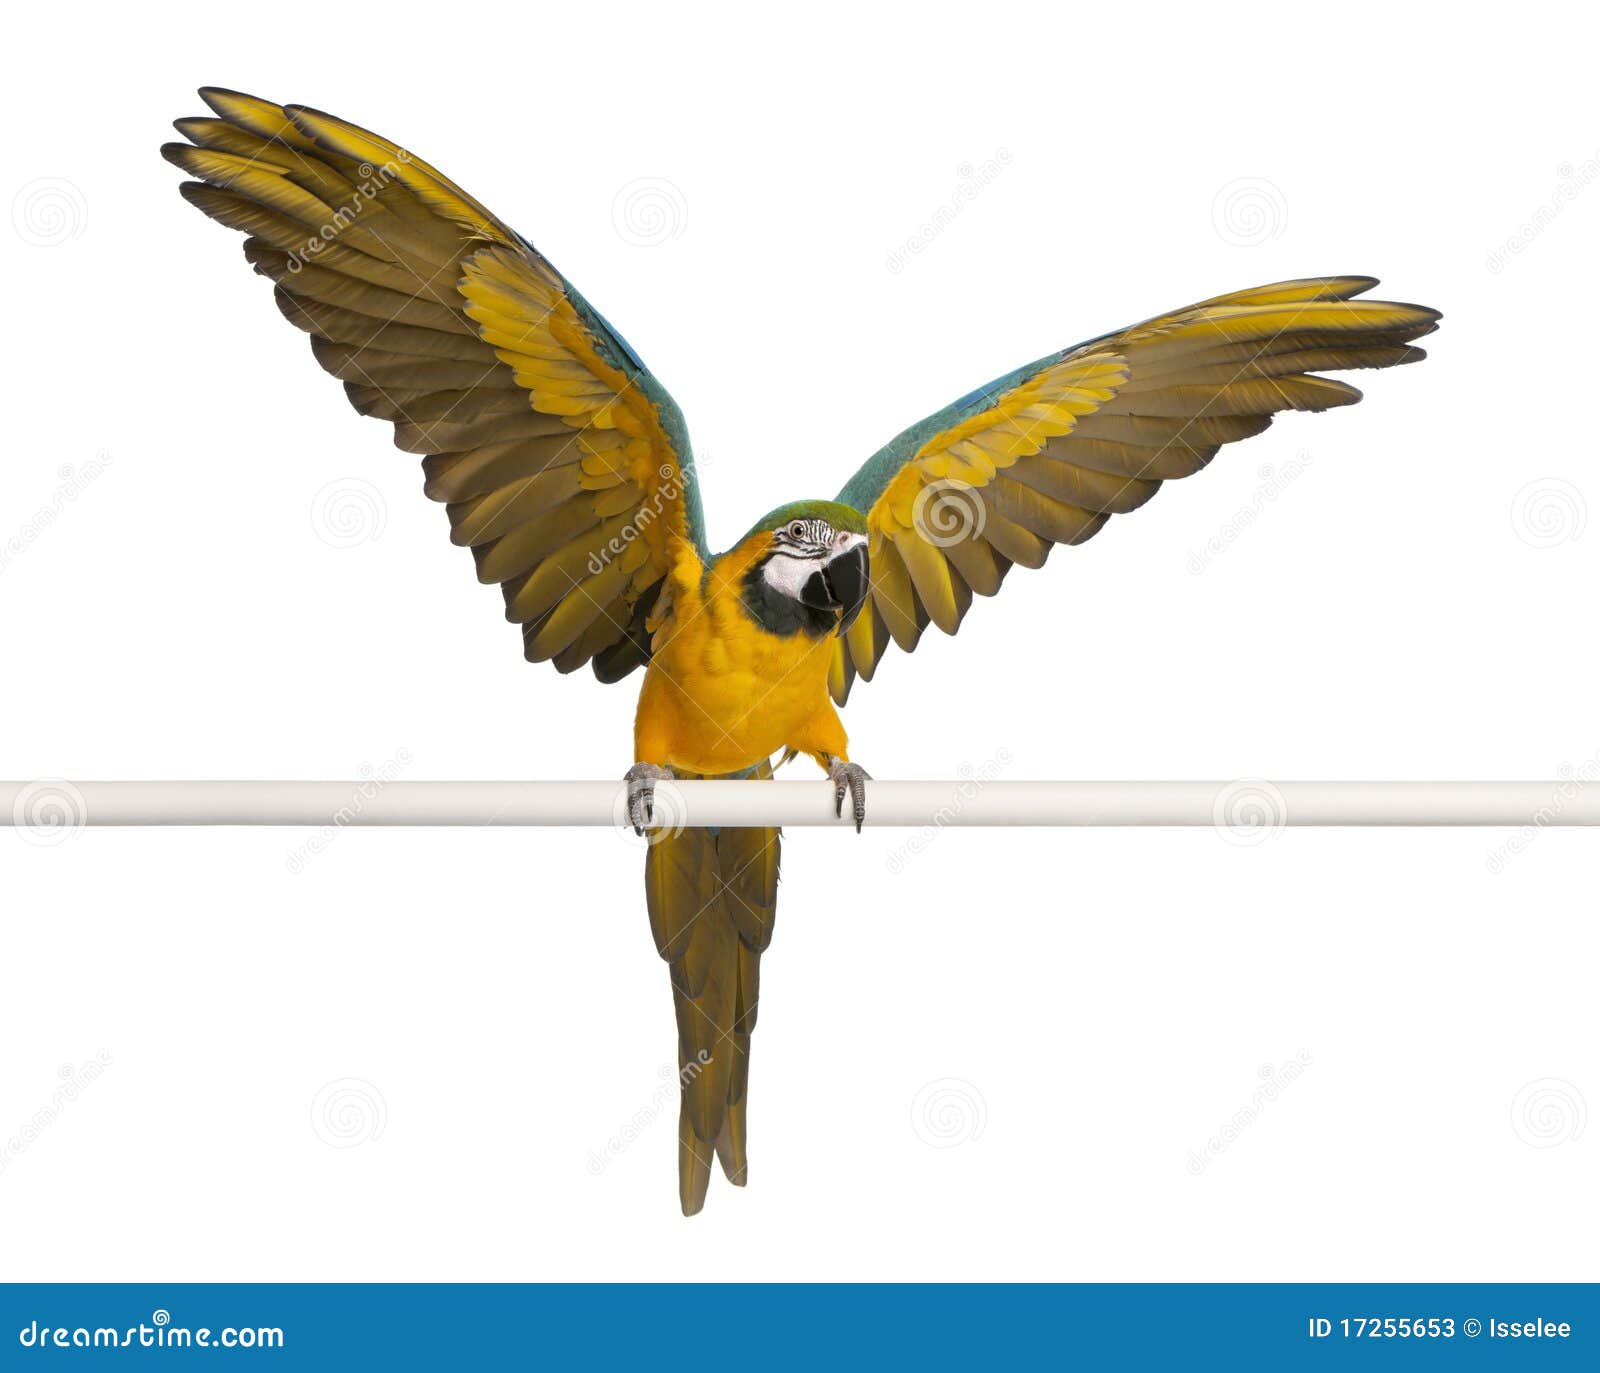 blue and yellow macaw, ara ararauna